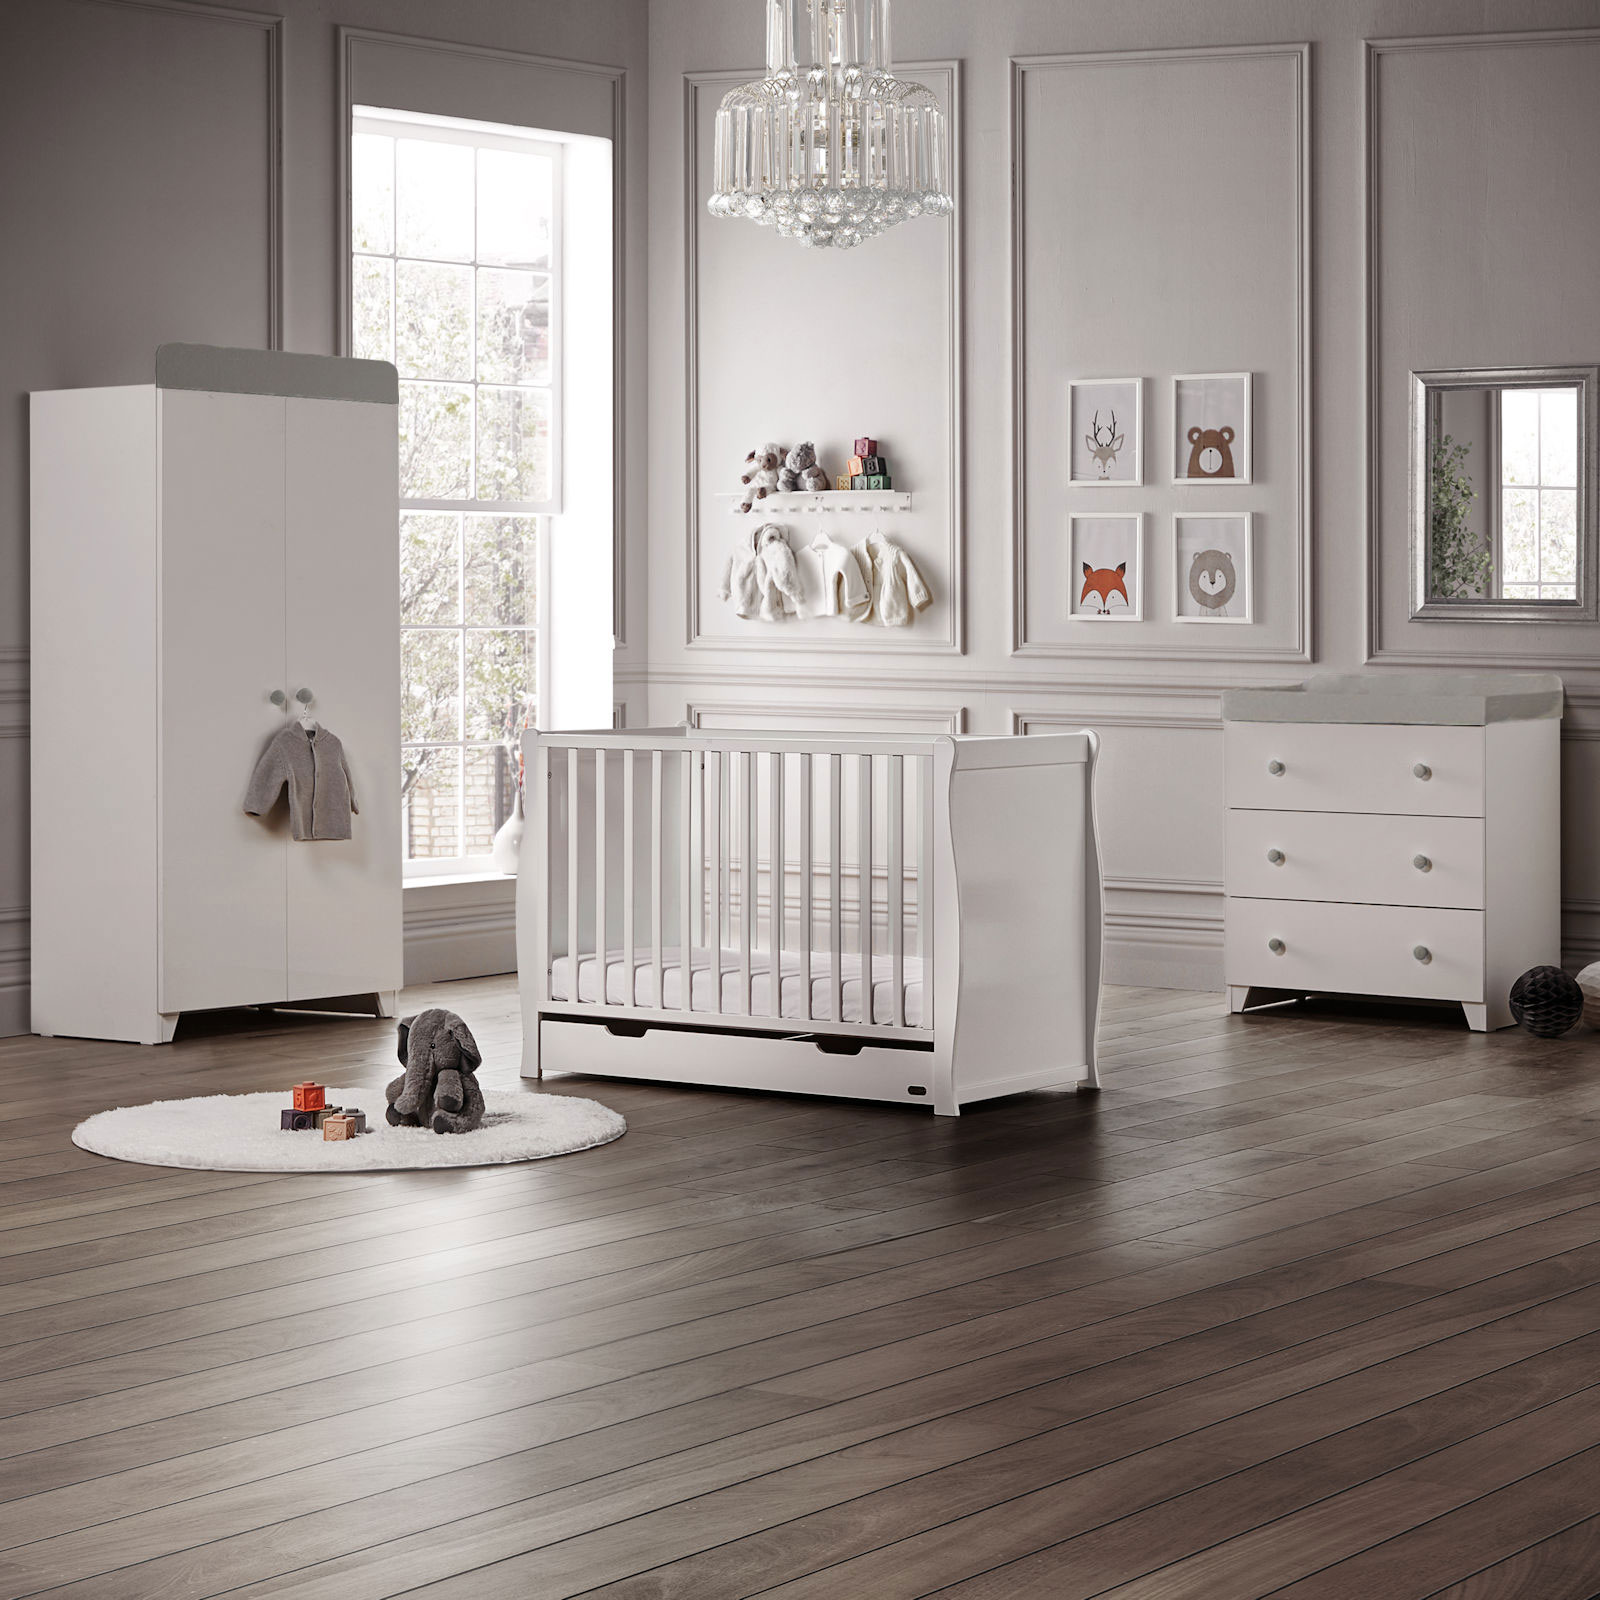 Puggle Chelford Sleigh Cot 6 Piece Nursery Furniture Set With Eco Fibre Mattress - White/White & Grey